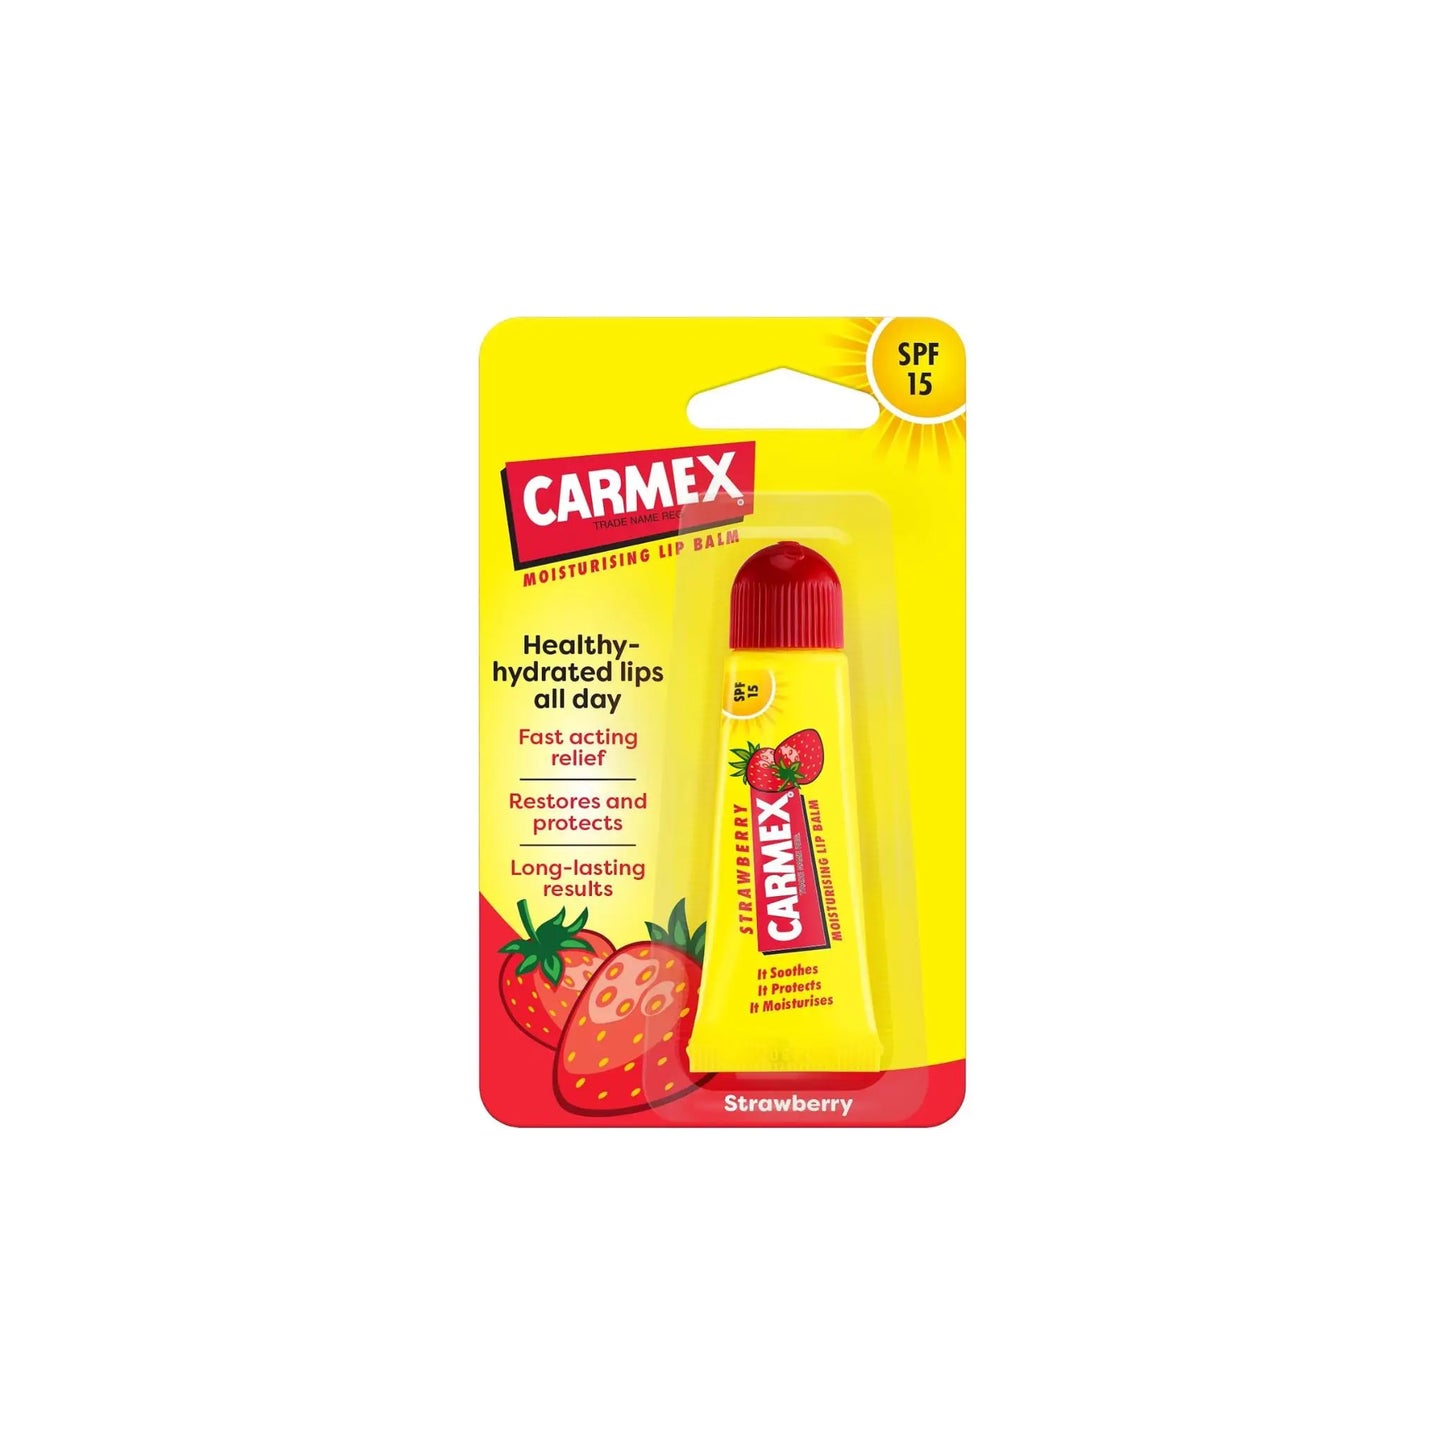 Carmex Strawberry Tube SPF15 10g - PACK OF 3. Carmex